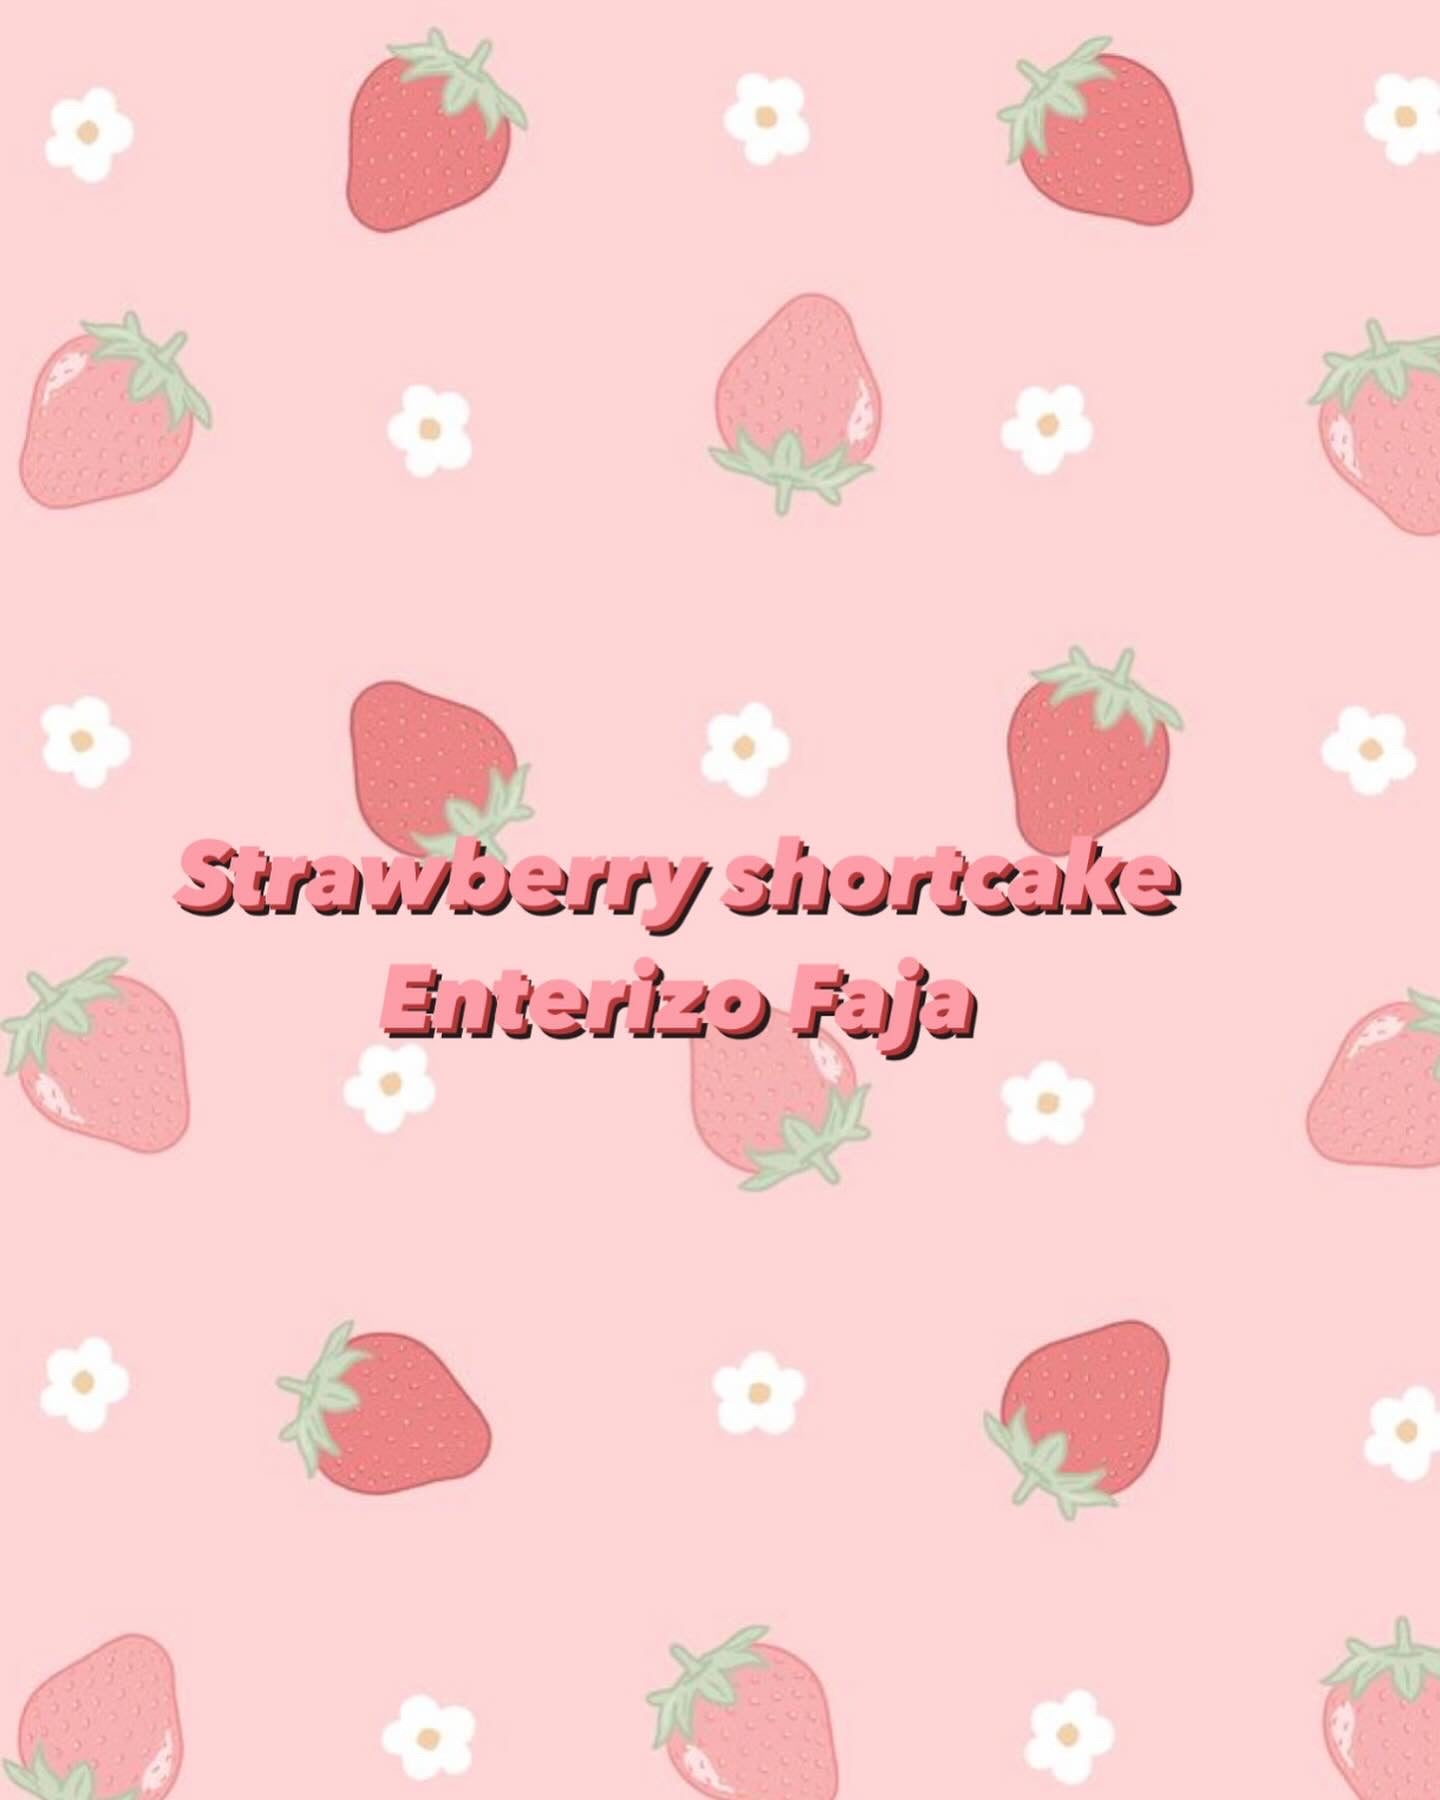 Strawberry shortcake Enterizo Faja